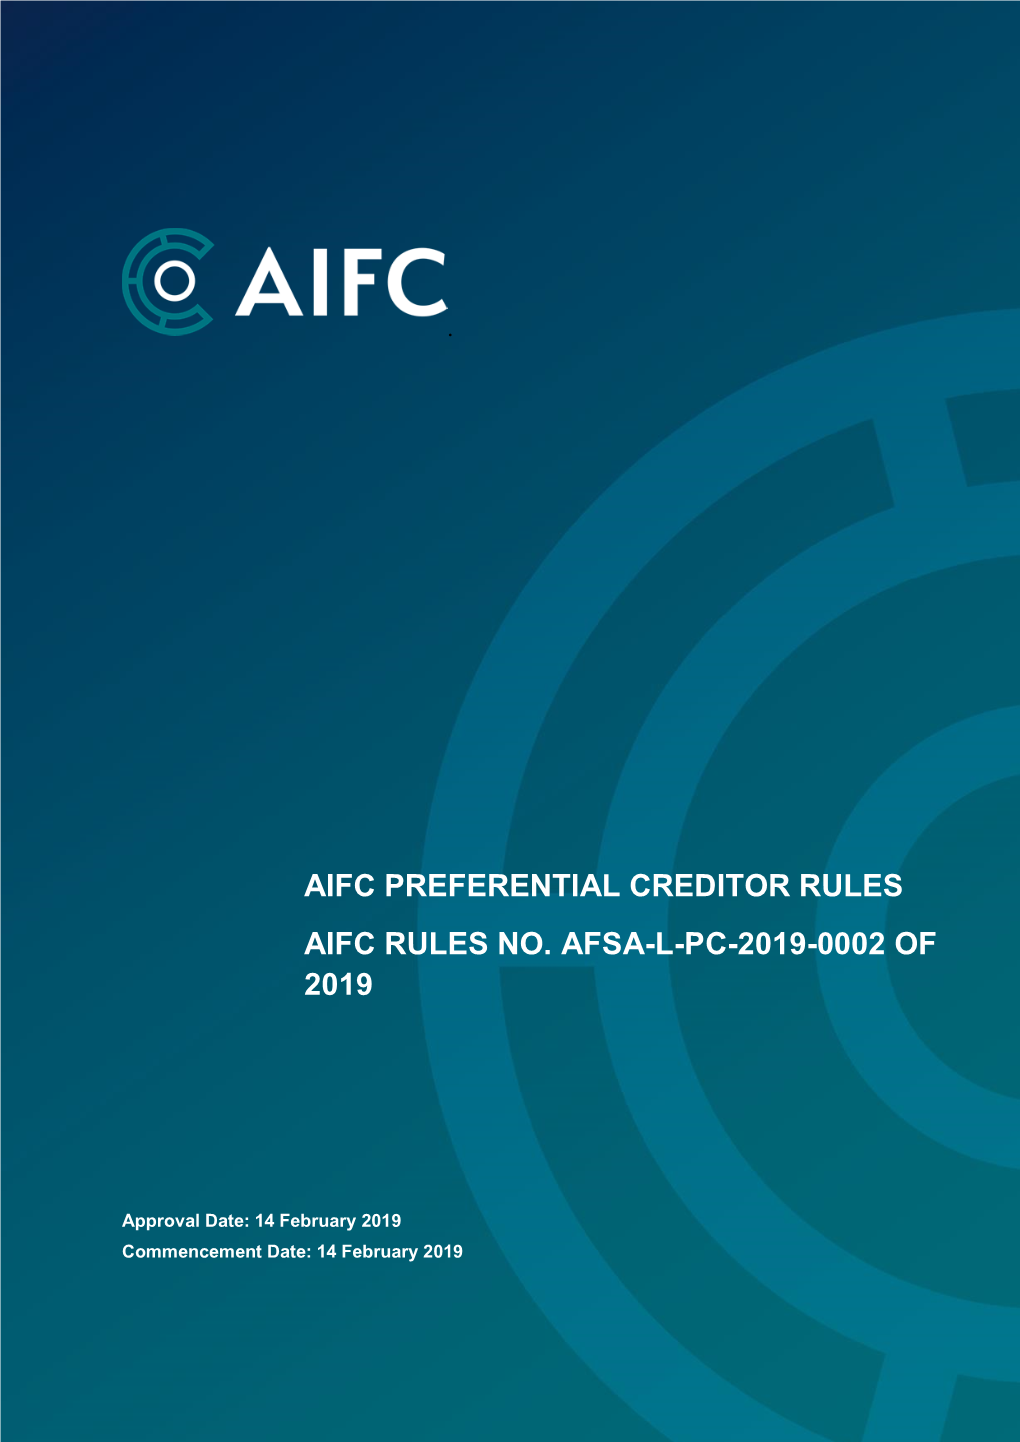 Aifc Preferential Creditor Rules Aifc Rules No. Afsa-L-Pc-2019-0002 of 2019